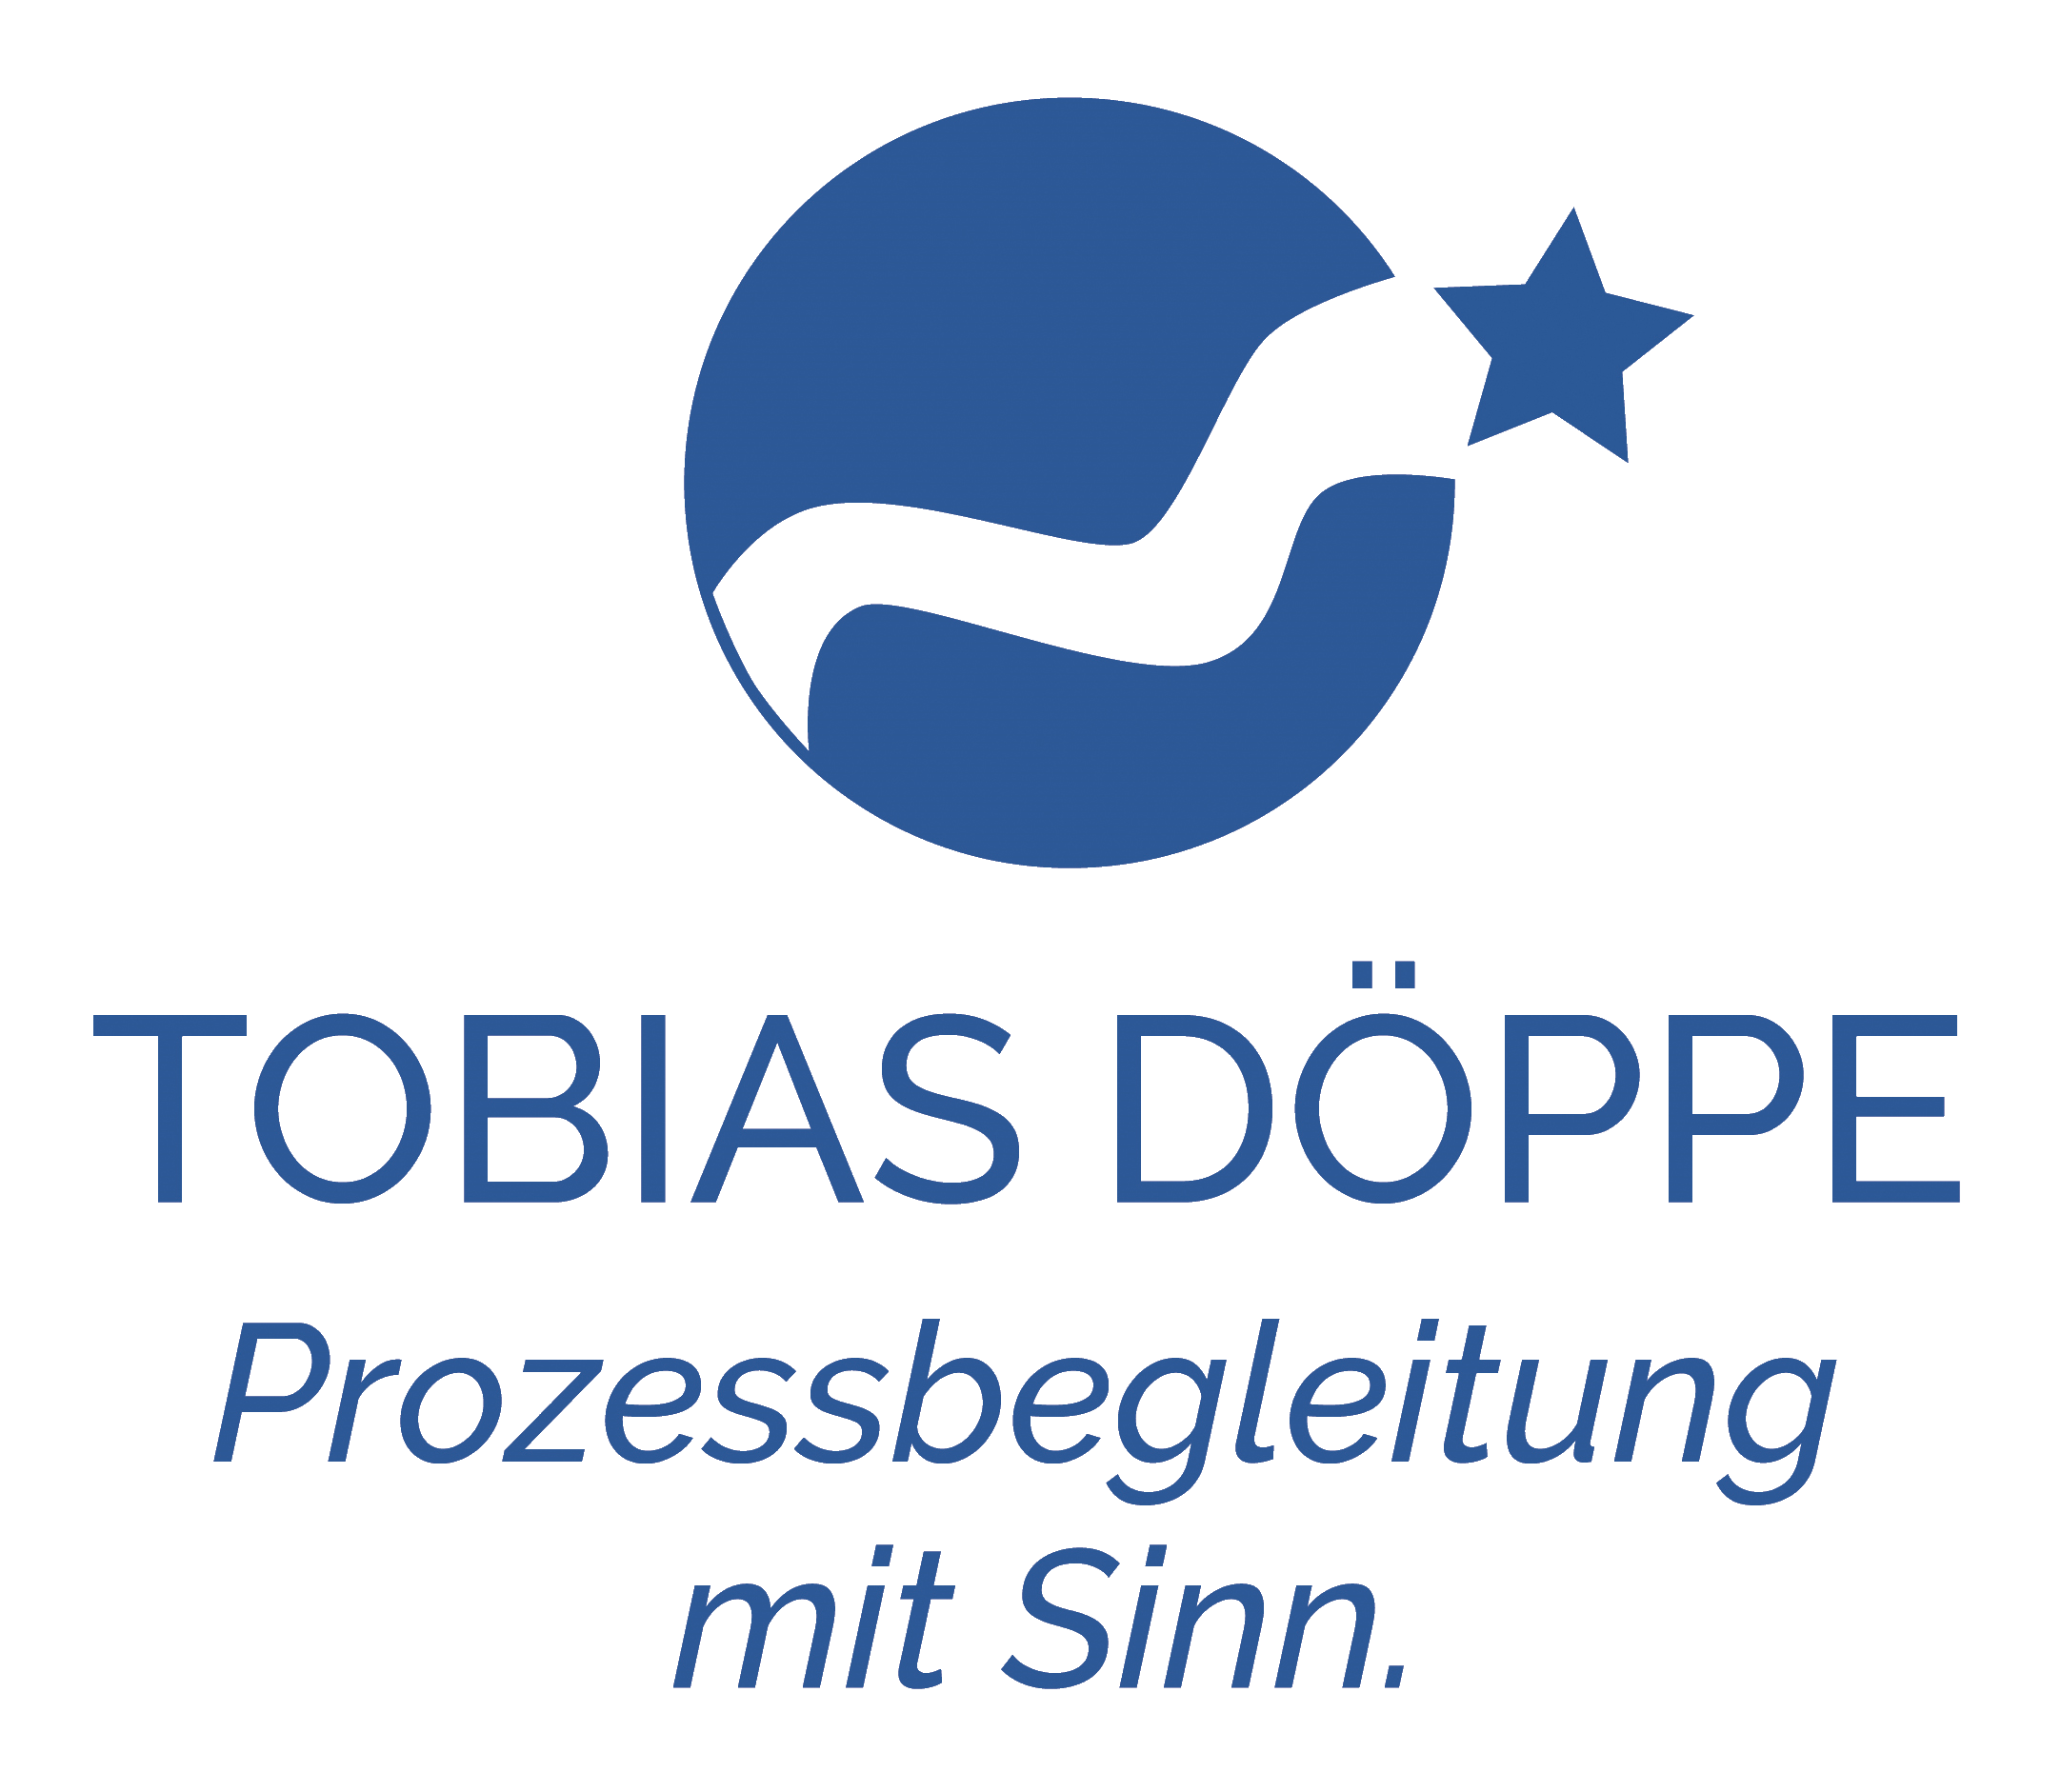 Tobias Döppe